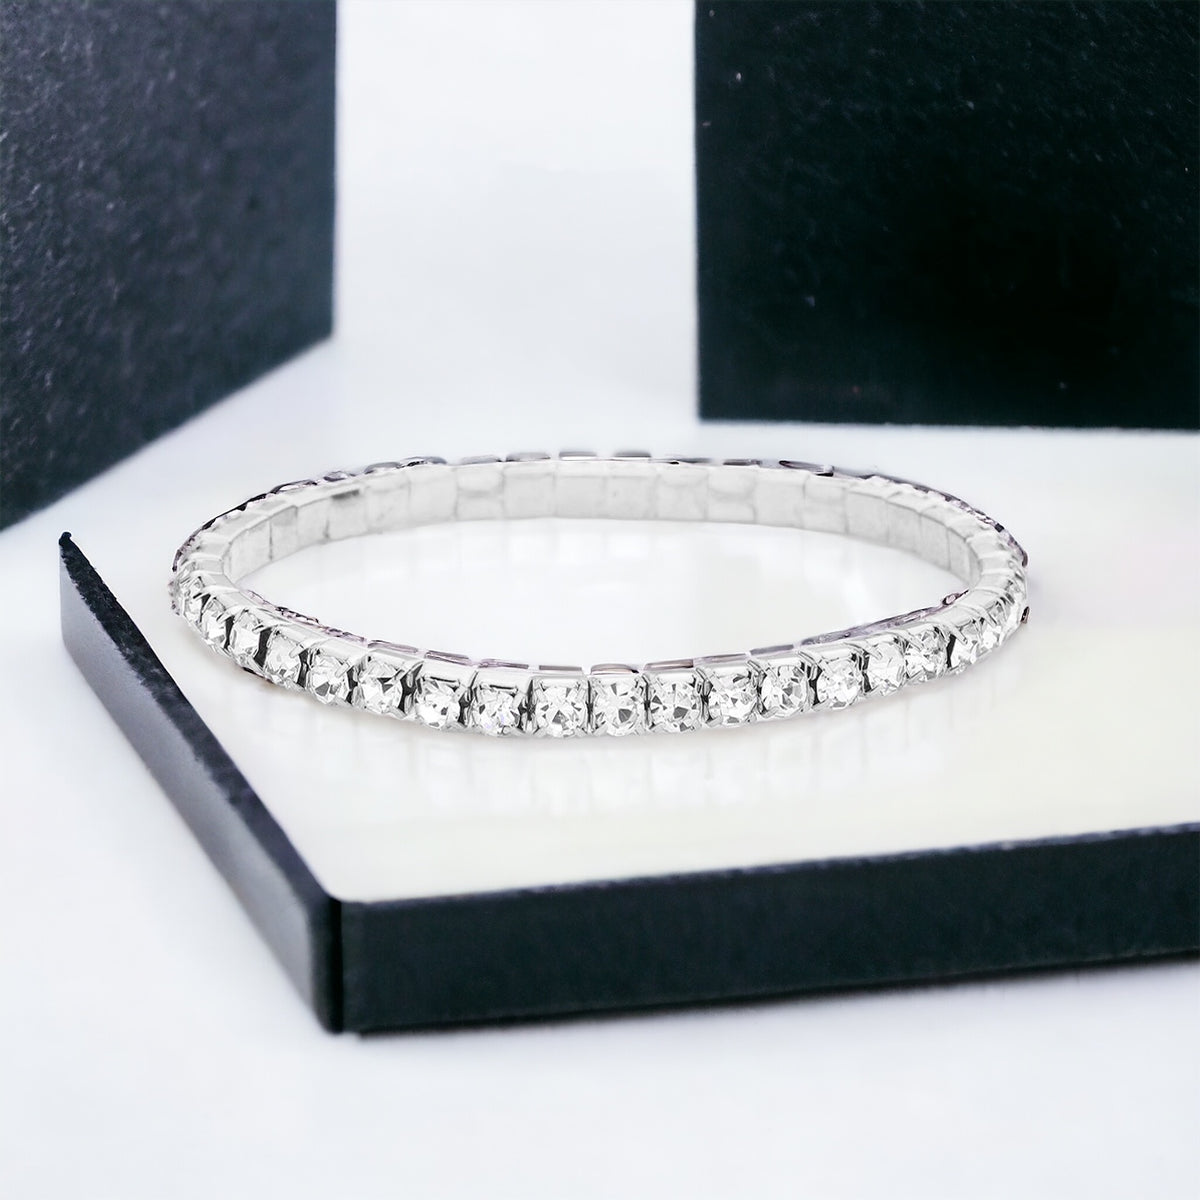 MADISON -clear silver 1 row stretch rhinestone bracelet